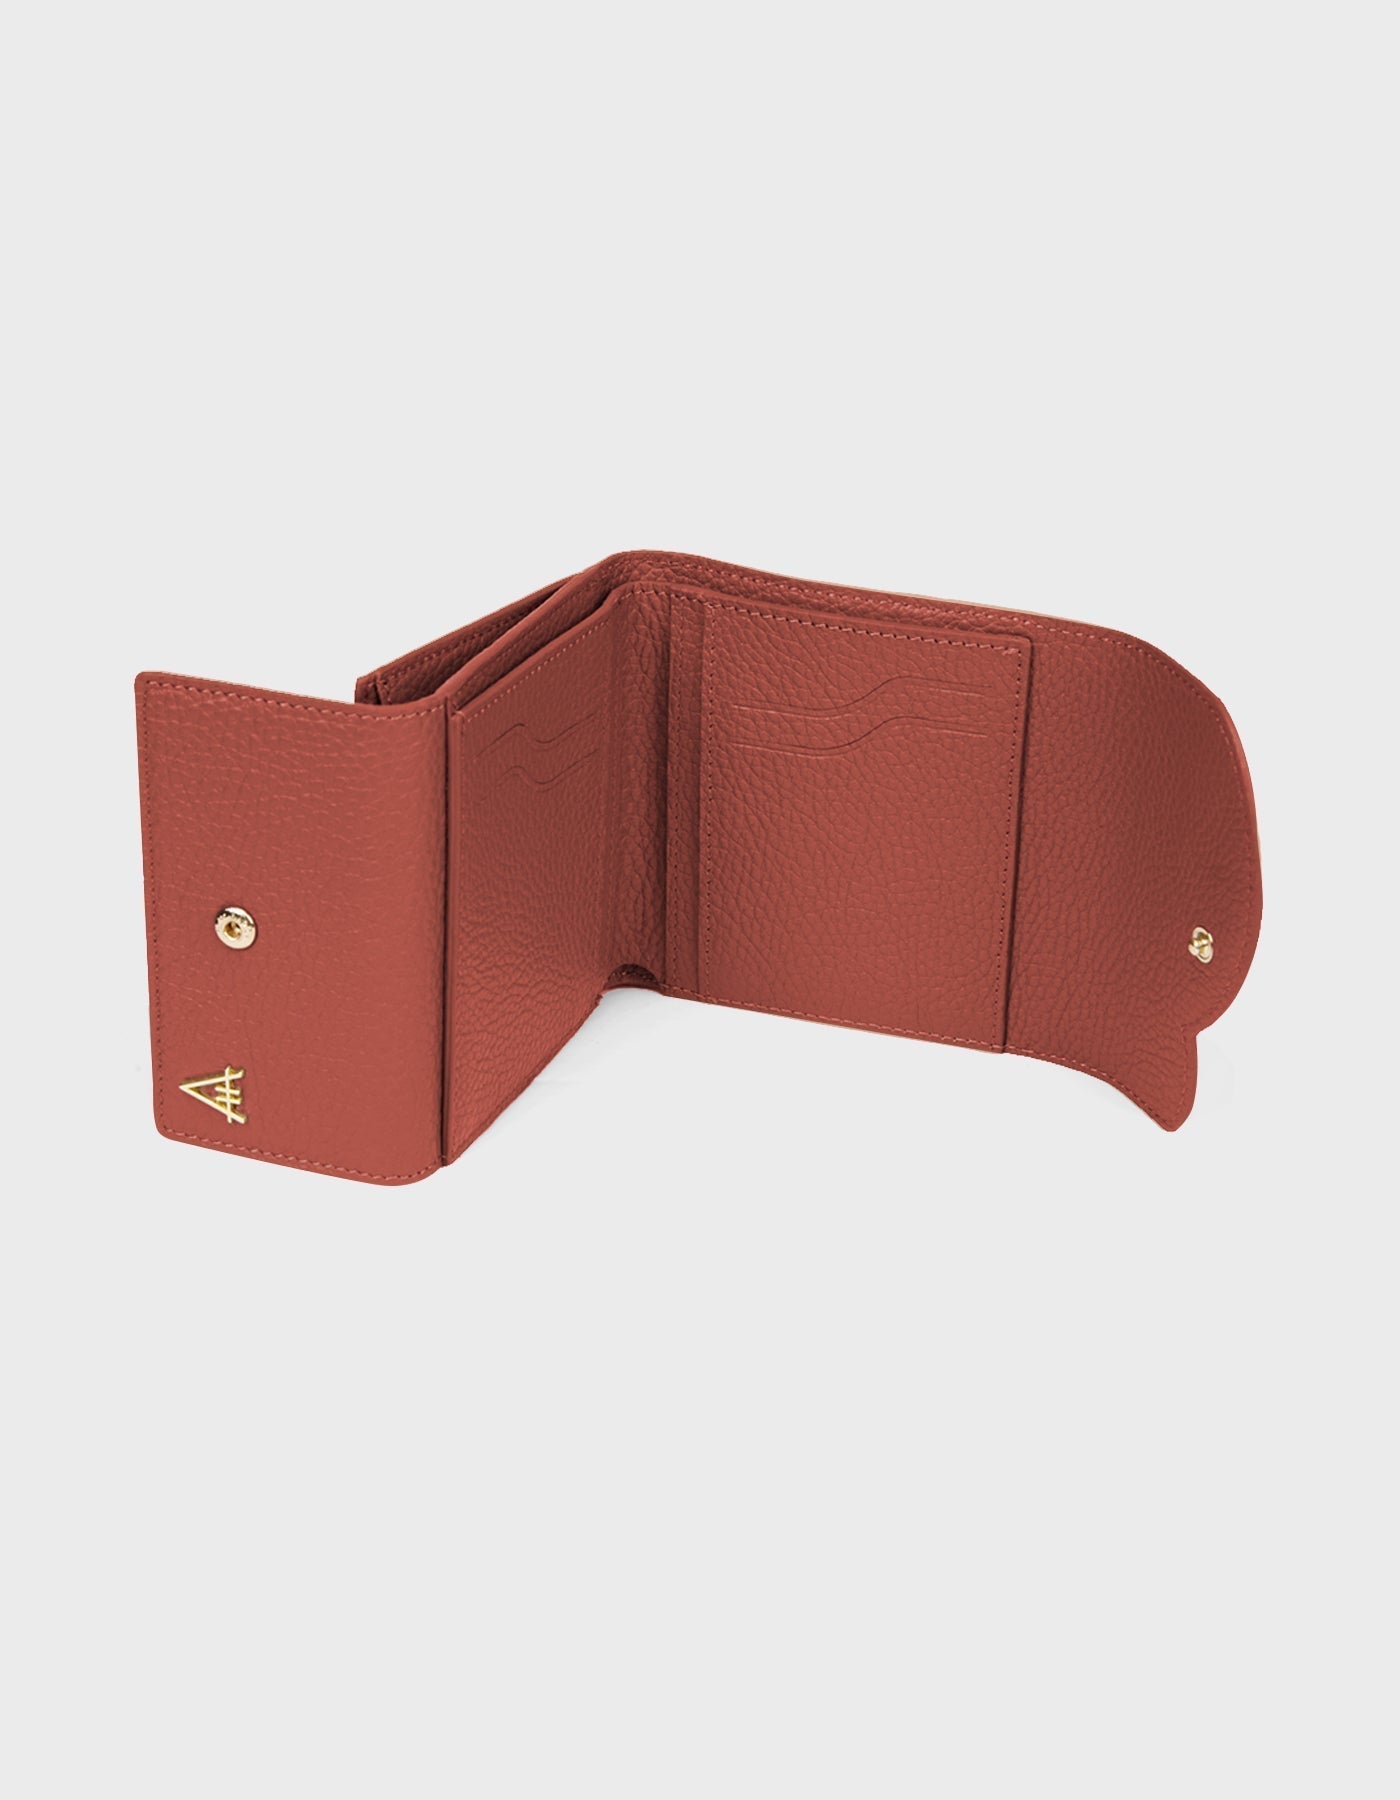 HiVa Atelier - Larus Compact Wallet Ginger